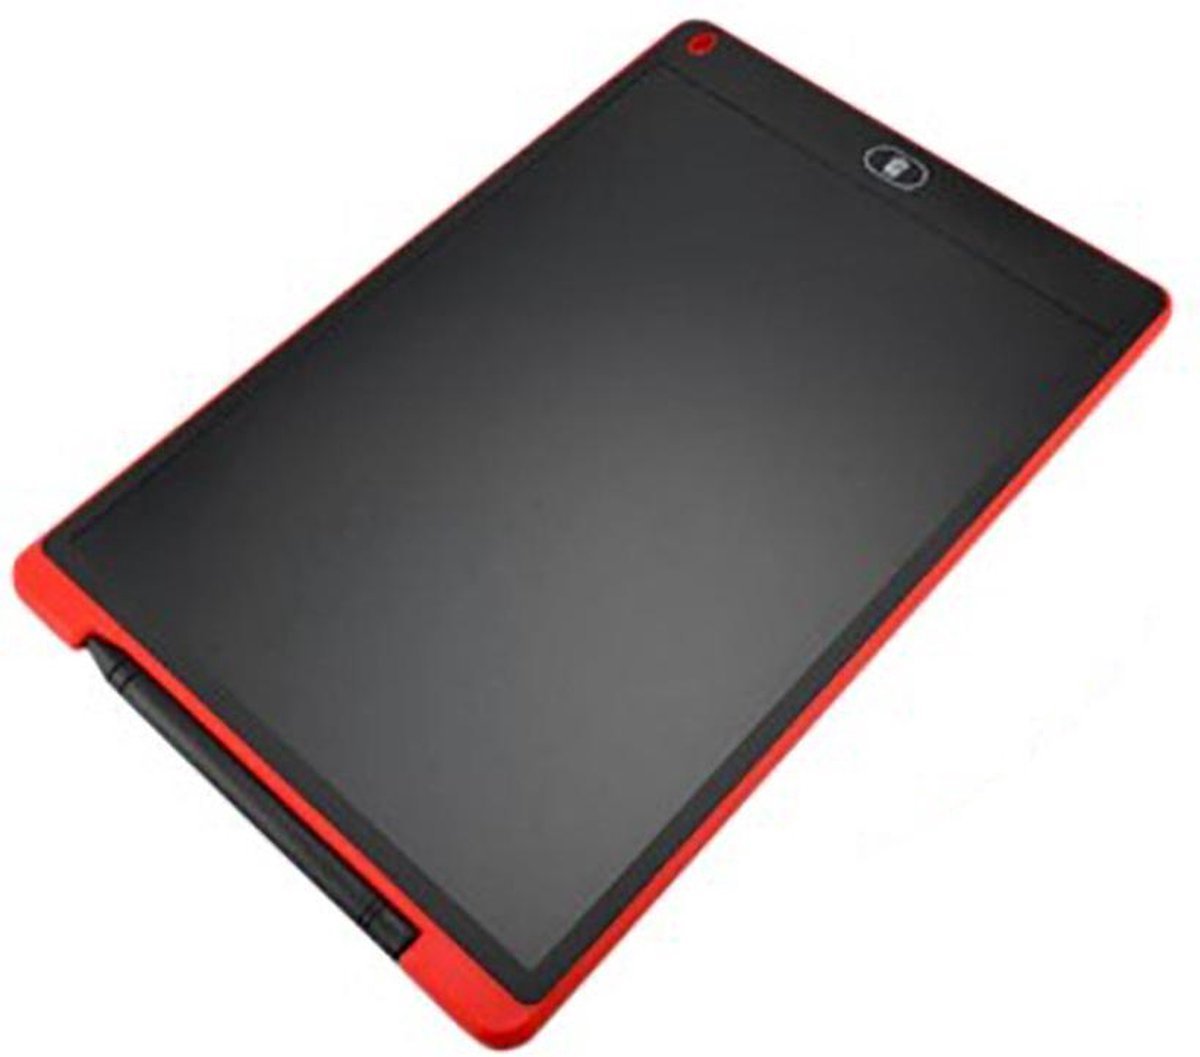 CHPN - Tekentablet - Teken tablet - Digitaal tekenen - Kinder teken tablet - 8,5 INCH - LCD - Zwart/Rood - Universeel